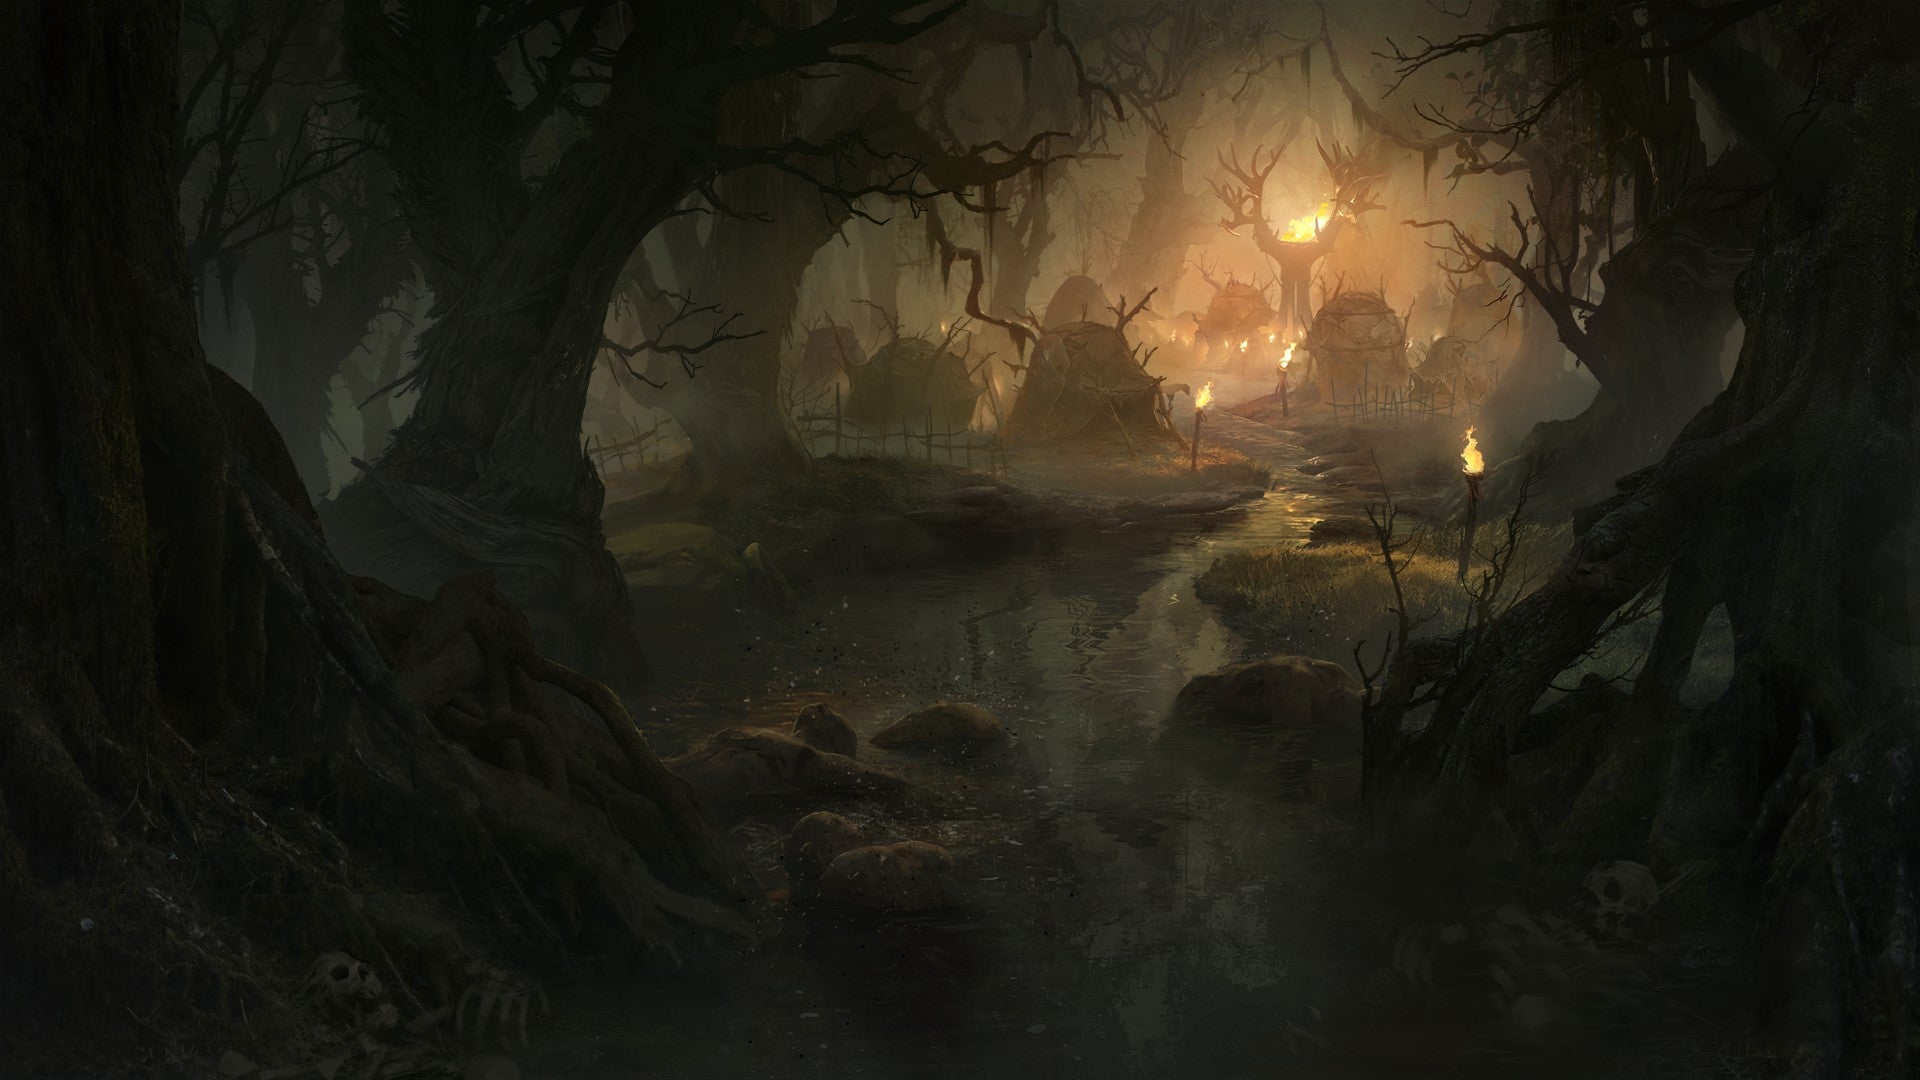 The Bilefen swamp zone in Diablo Immortal